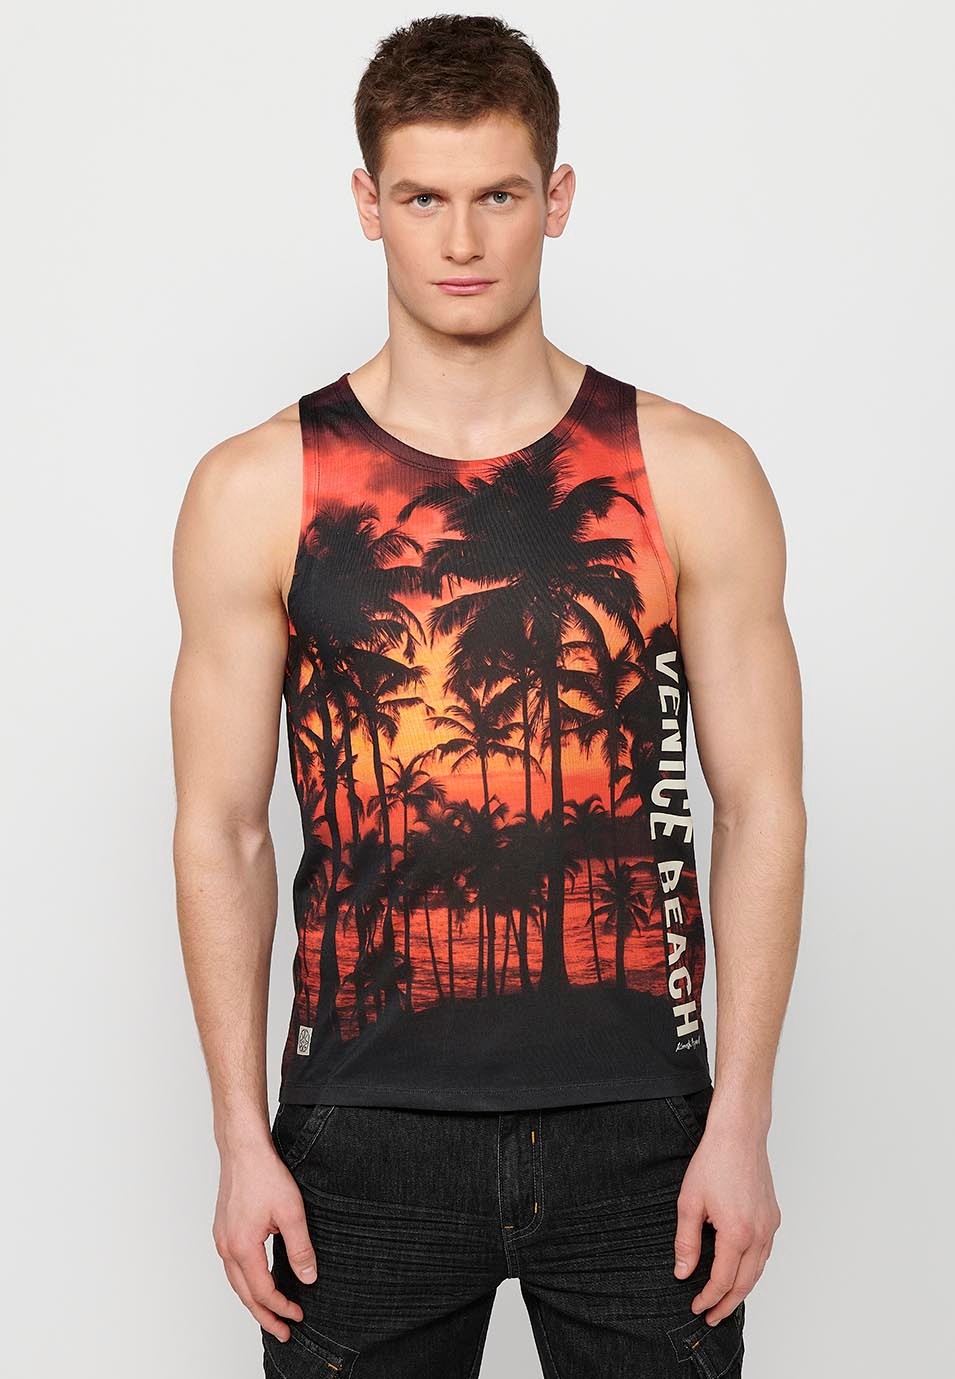 Tank top, Venice Beach print, black color for men